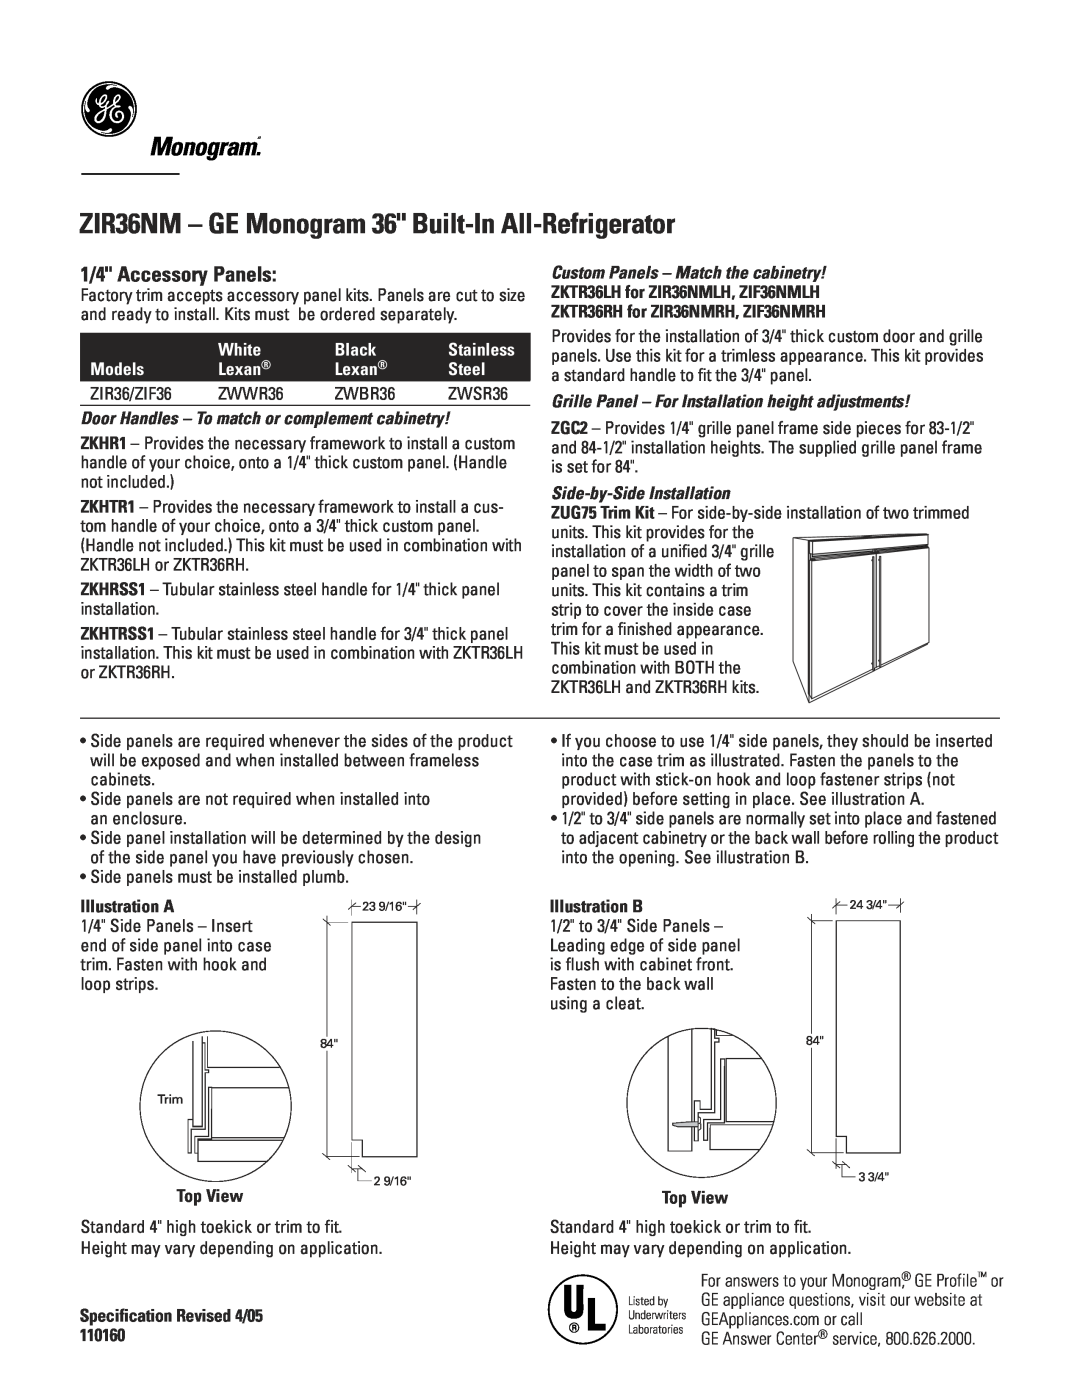 GE ZIR36NM - GE Monogram 36 Built-In All-Refrigerator, Monogram.“, 1/4 Accessory Panels, White, Black, Stainless, Lexan 